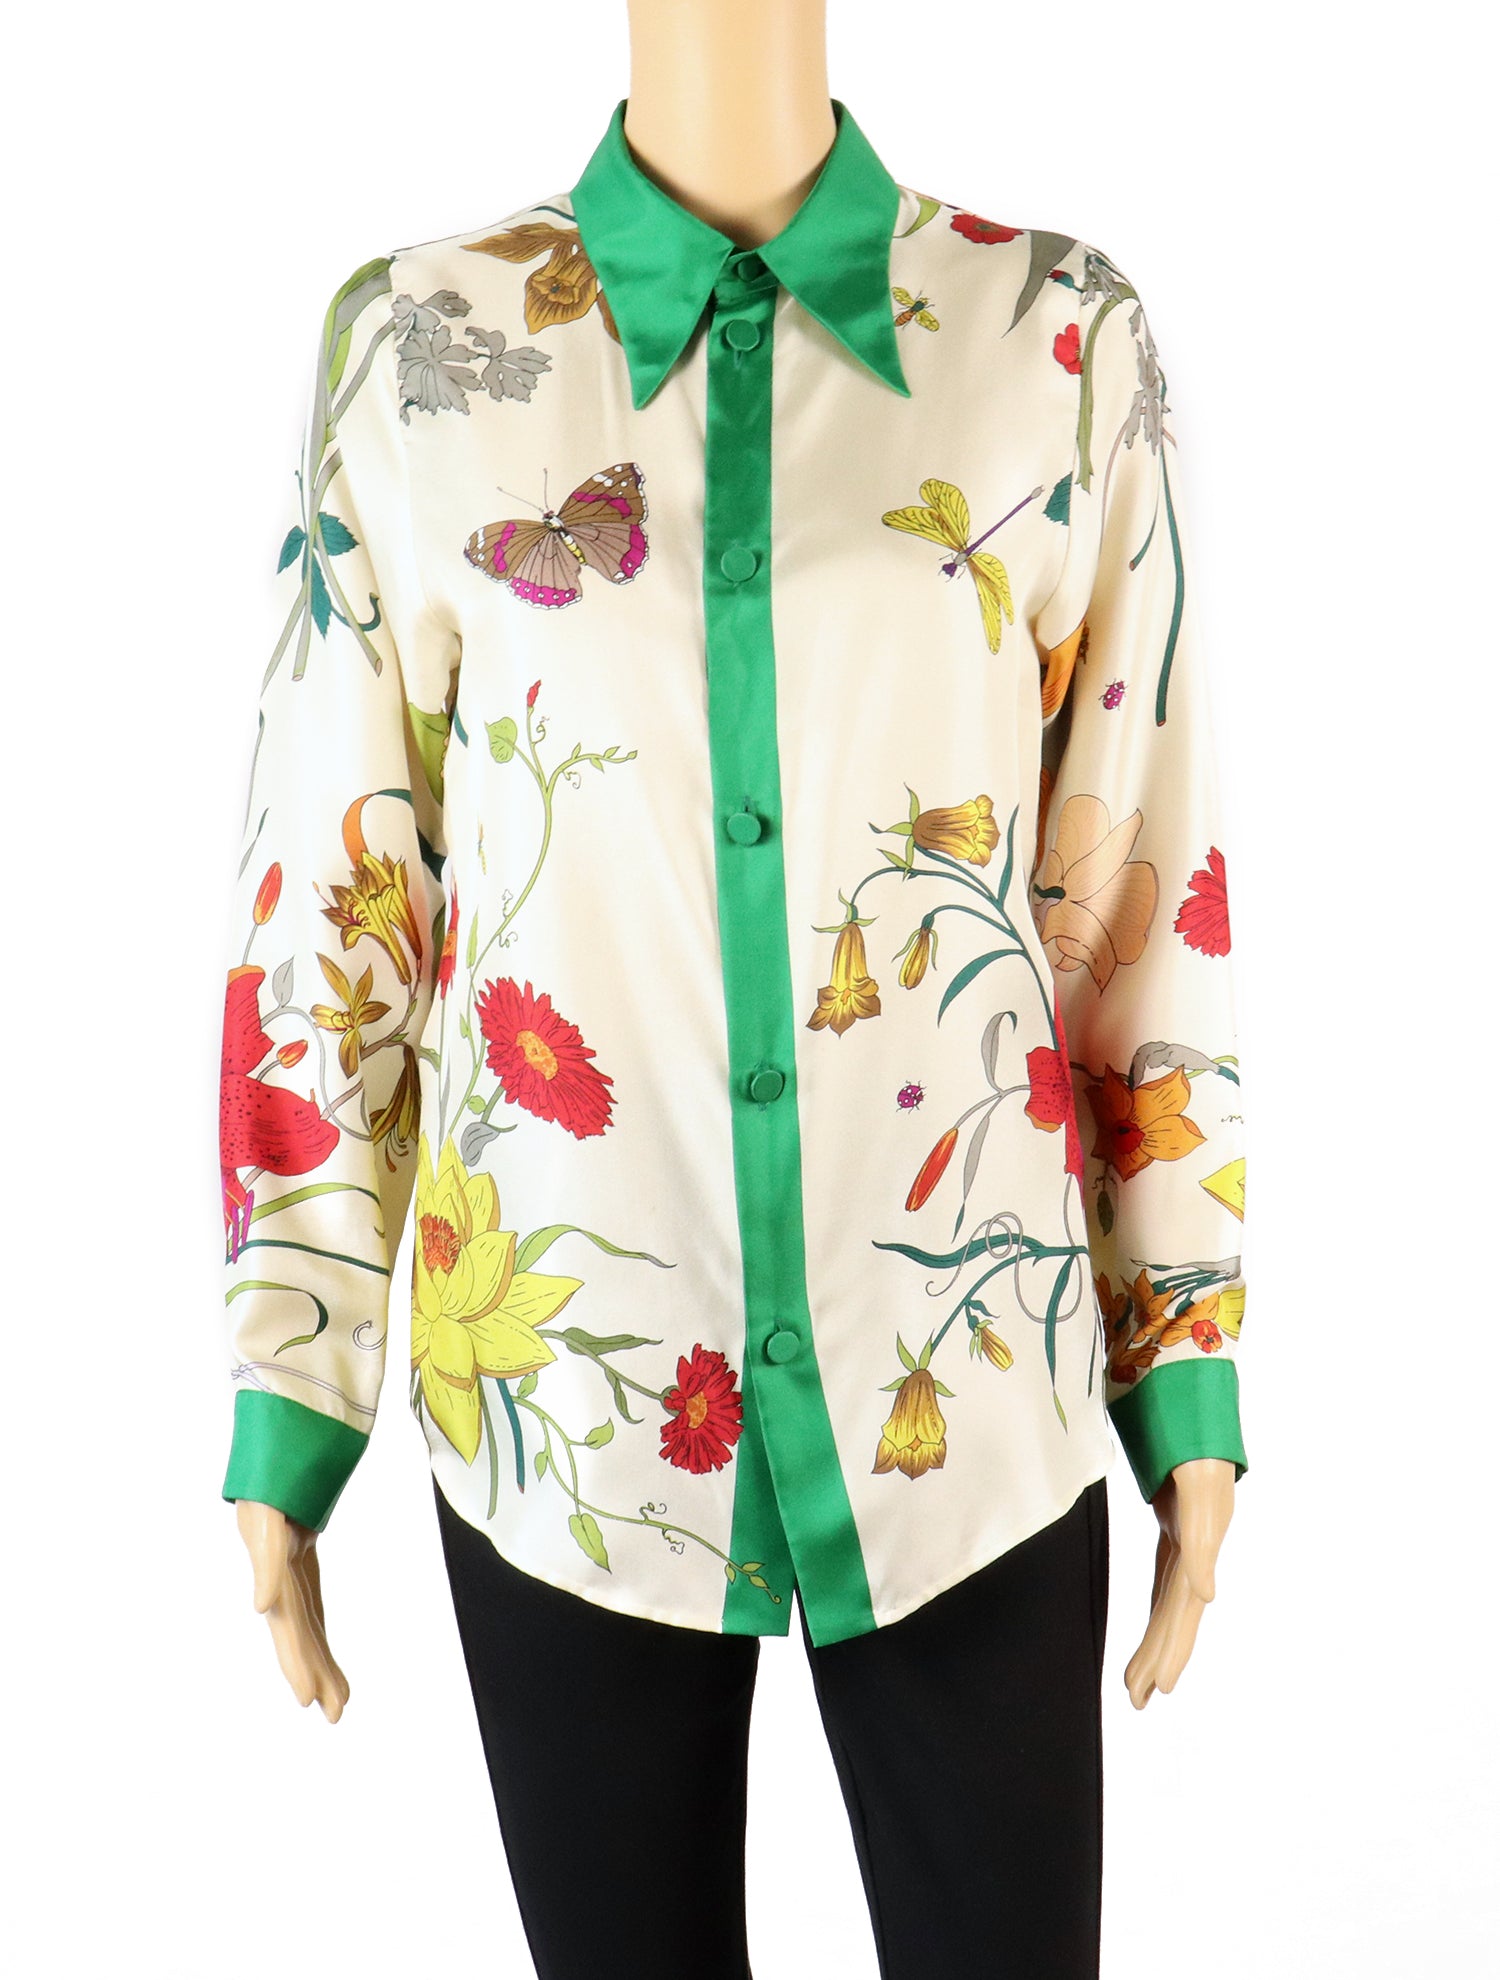 Sale Flower And Butterfly Gucci T Shirt Womens, Gucci Flower Shirt